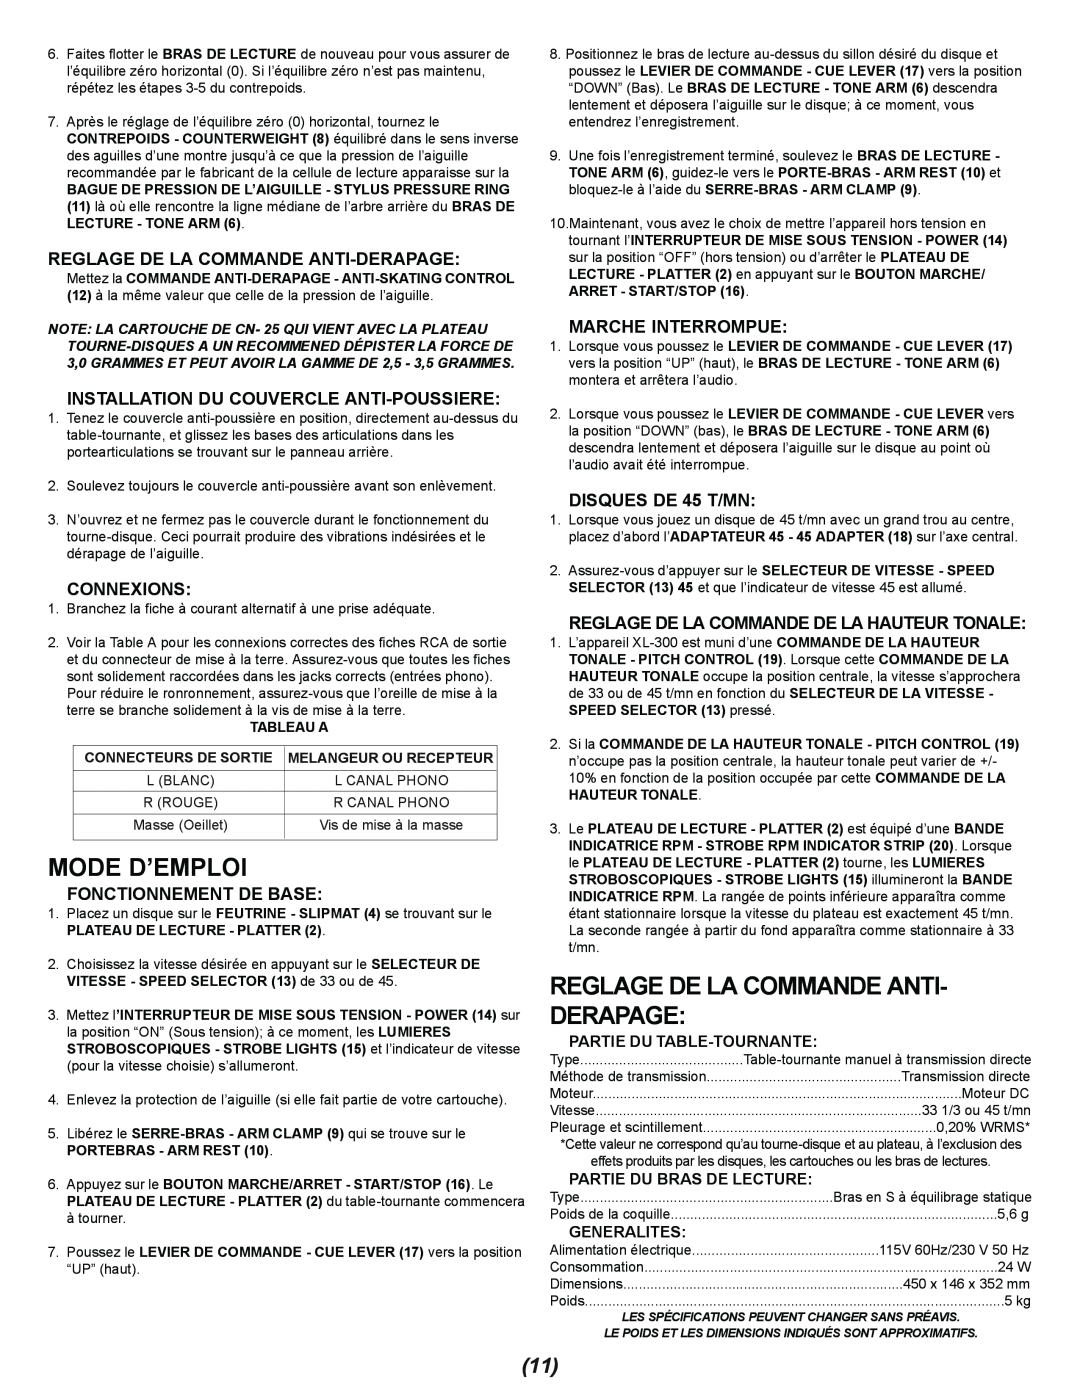 Gemini XL-300 manual Mode D’Emploi, Reglage De La Commande Anti- Derapage, Reglage De La Commande Anti-Derapage, Connexions 